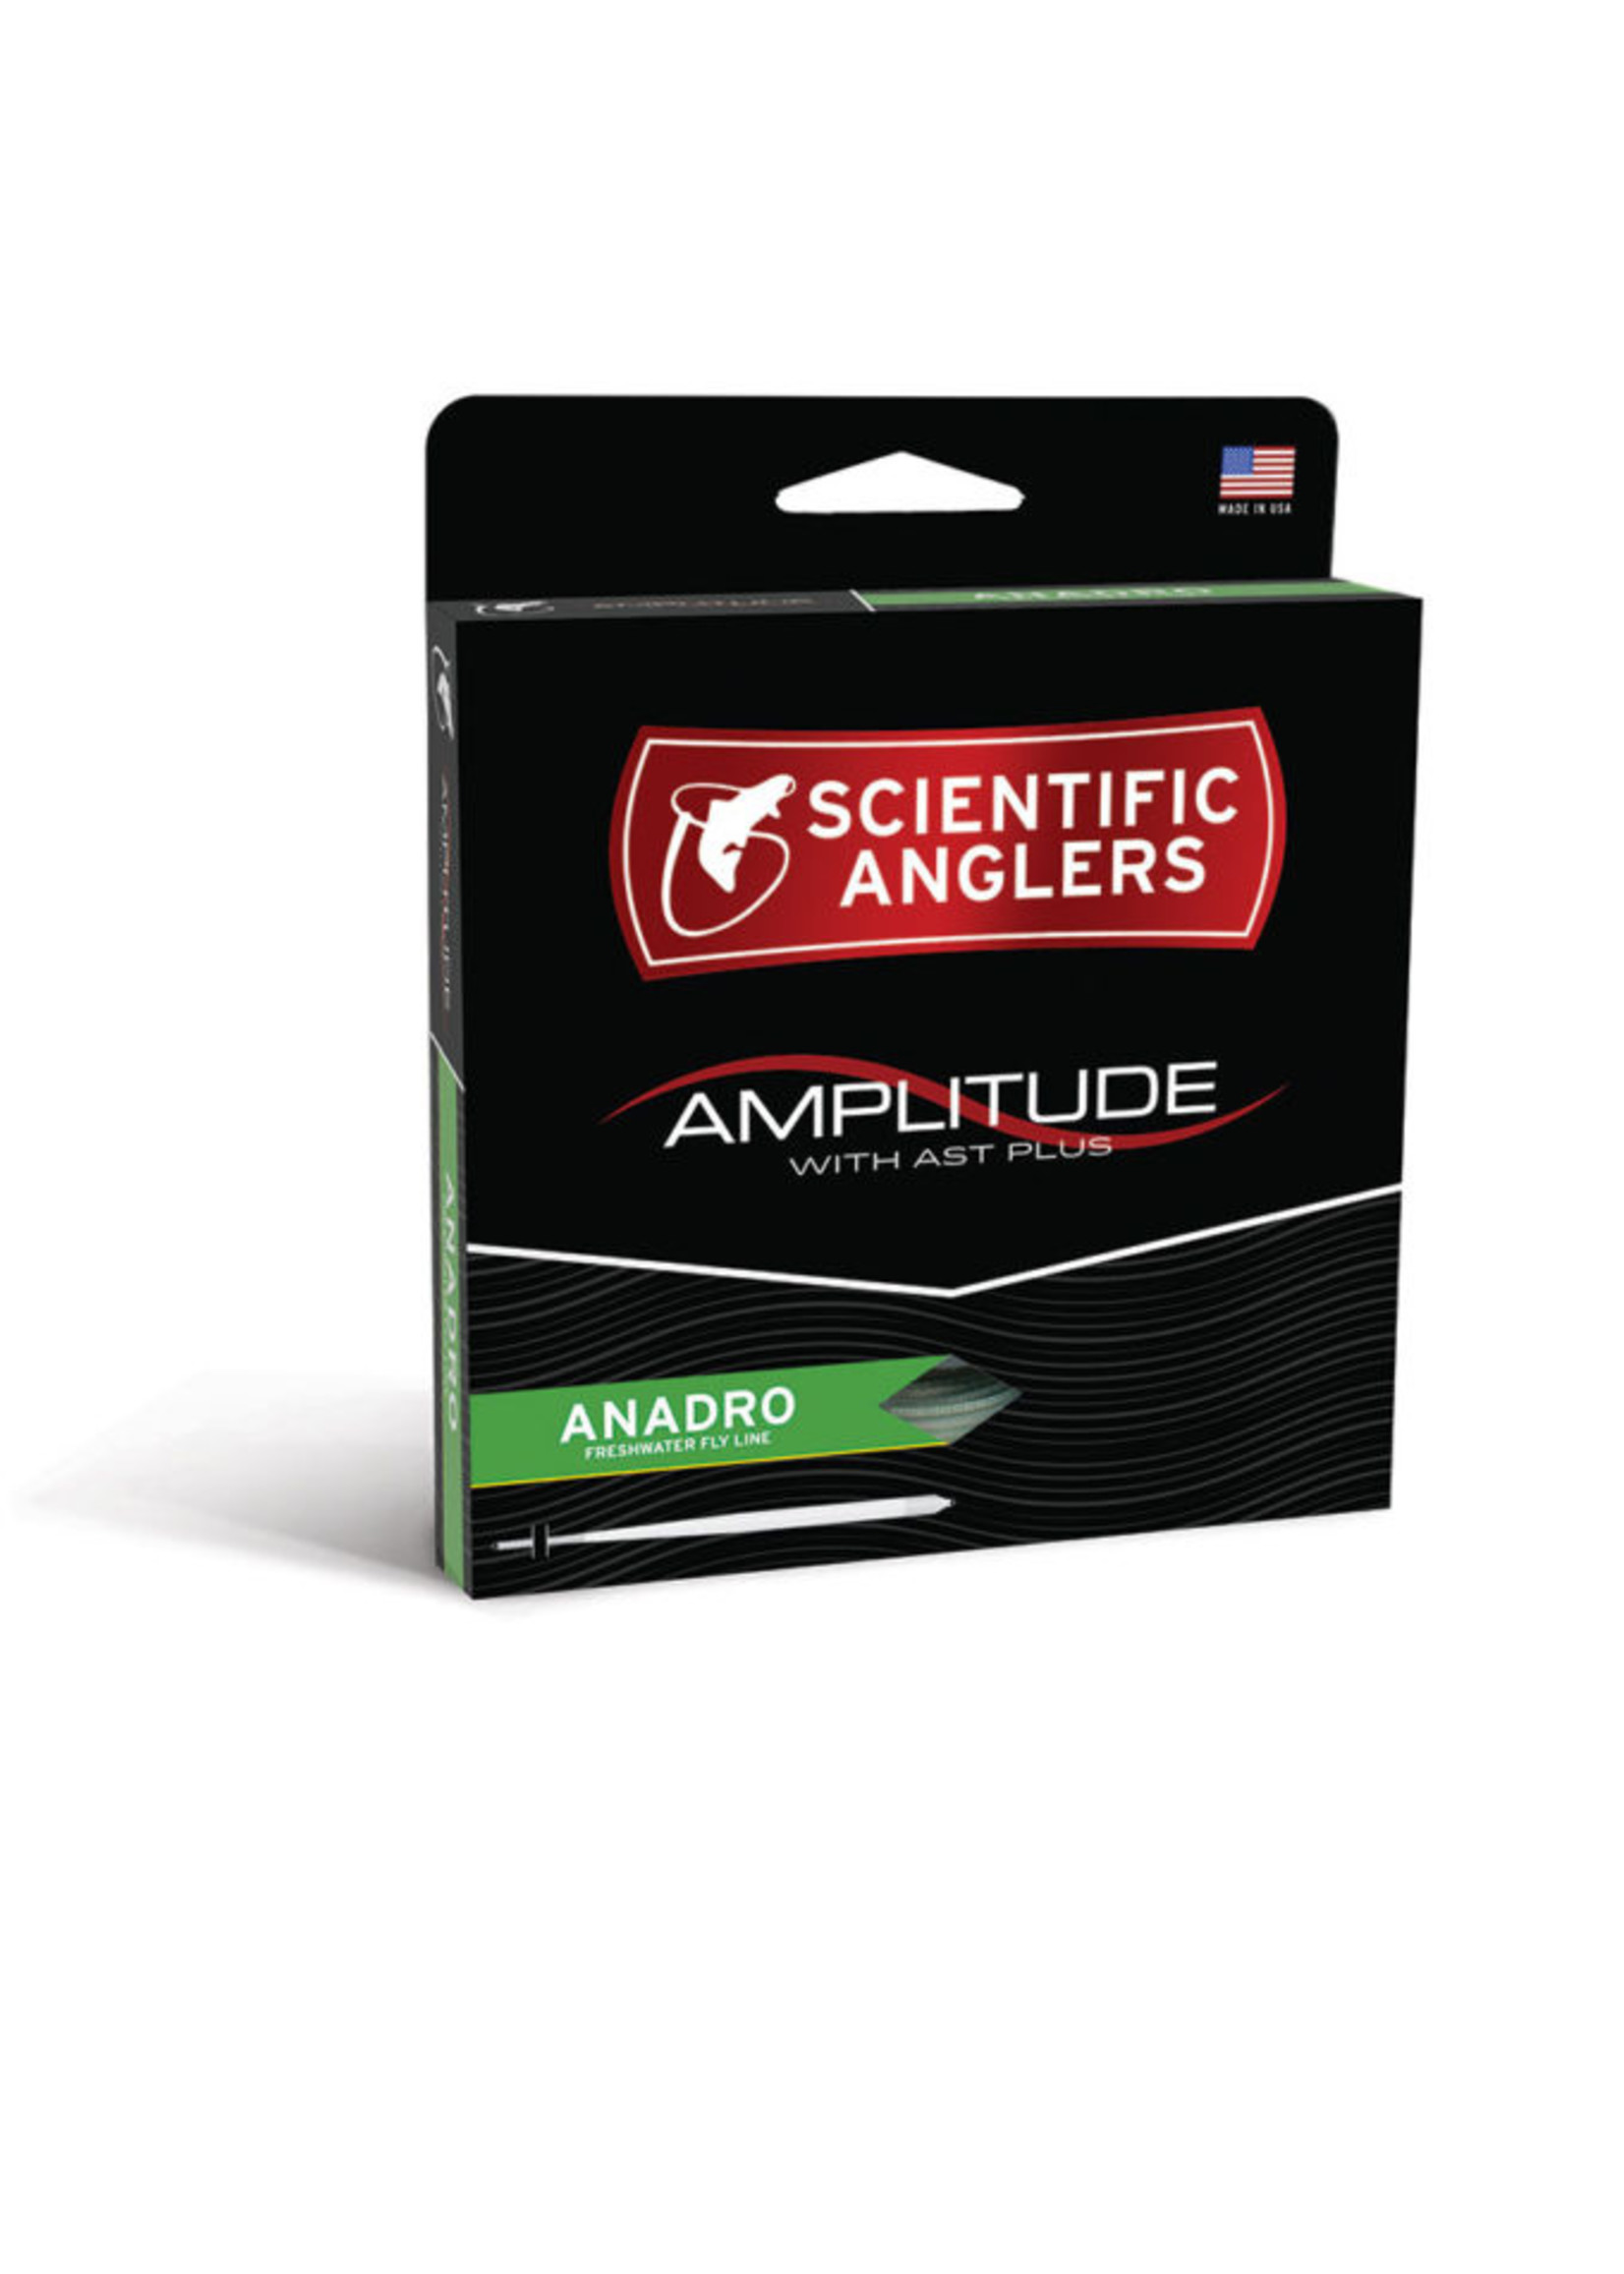 Scientific Anglers Scientific Anglers Amplitude Anadro Fly Line